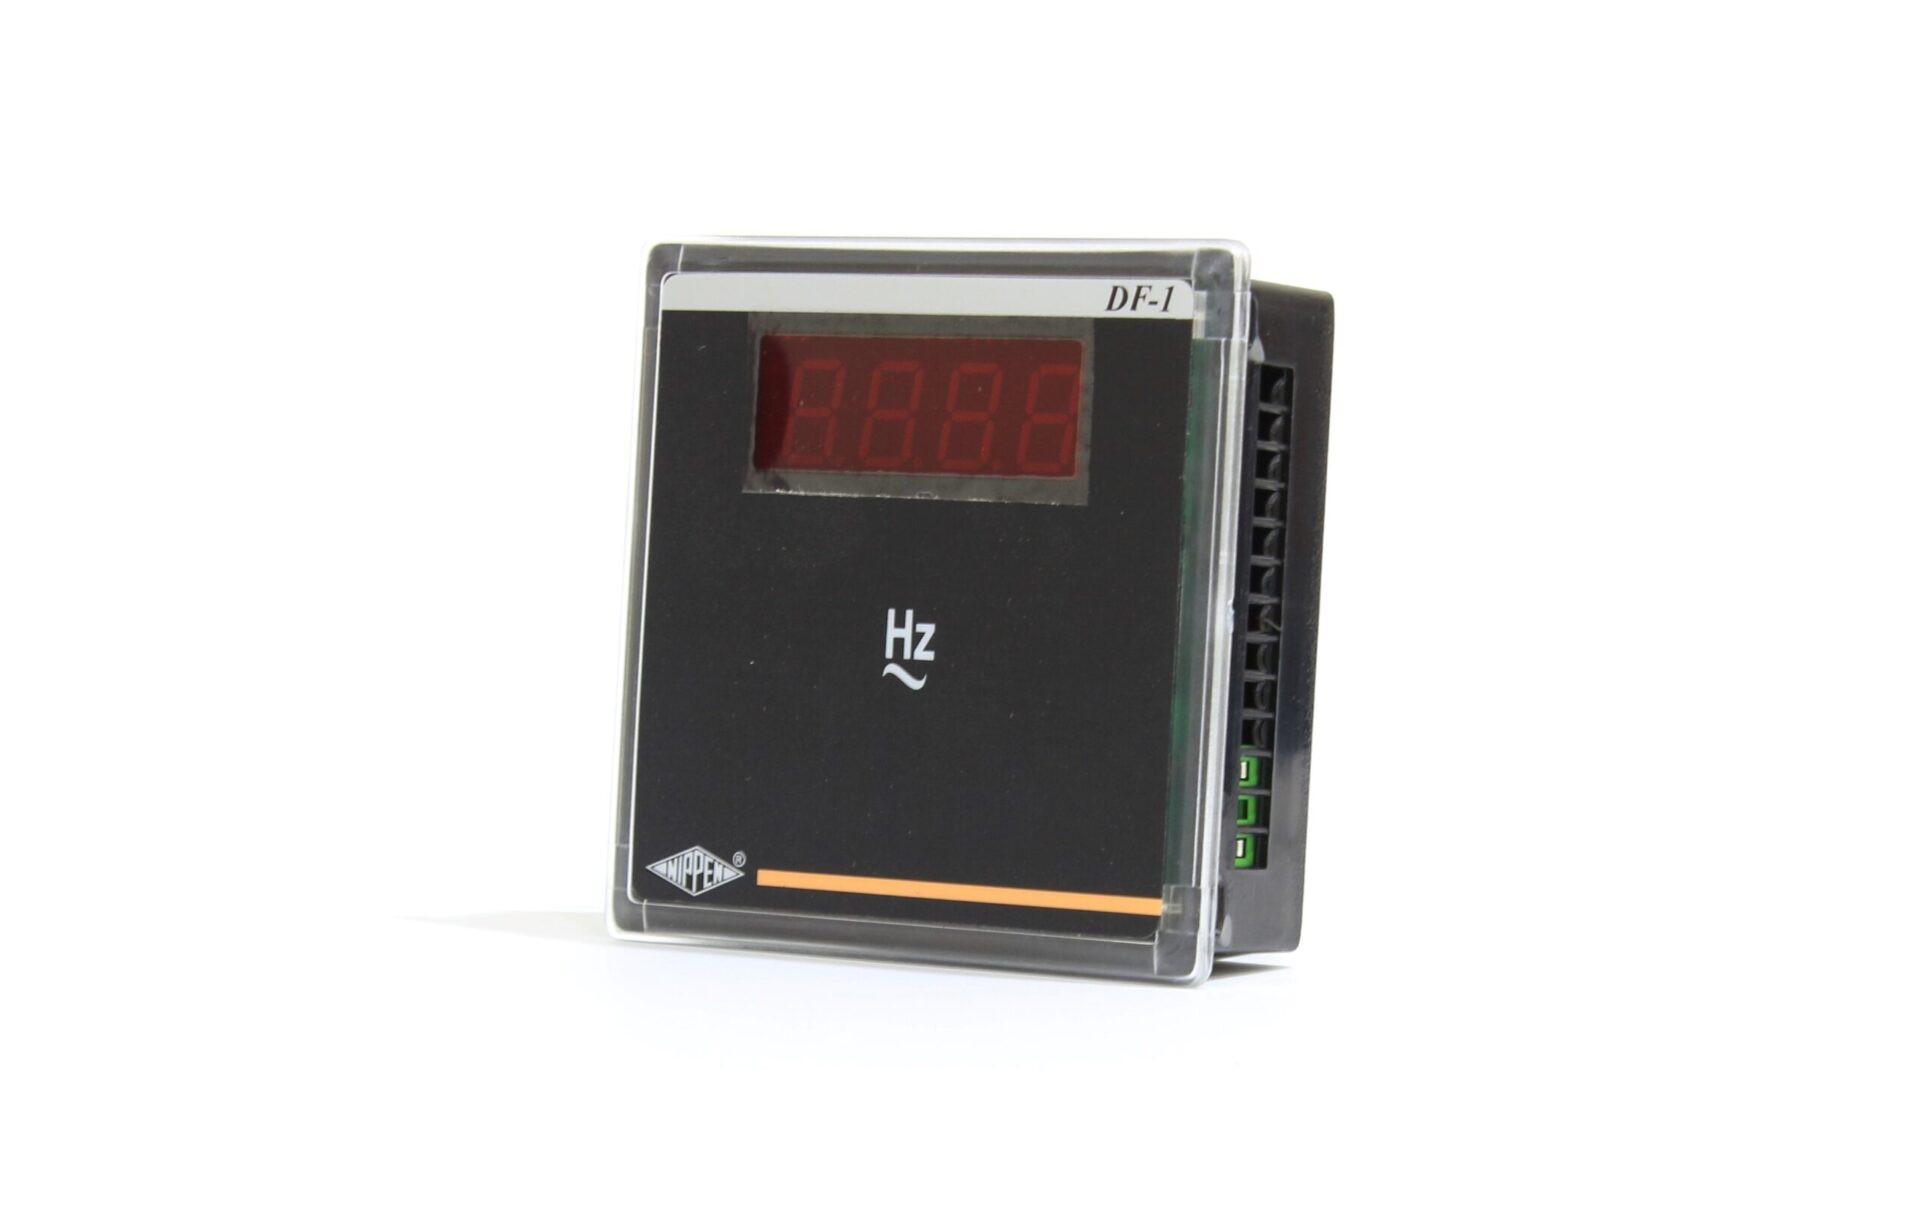 Digital Frequency Meter UAE Oman Qatar Saudi BahrainGo Switchgear